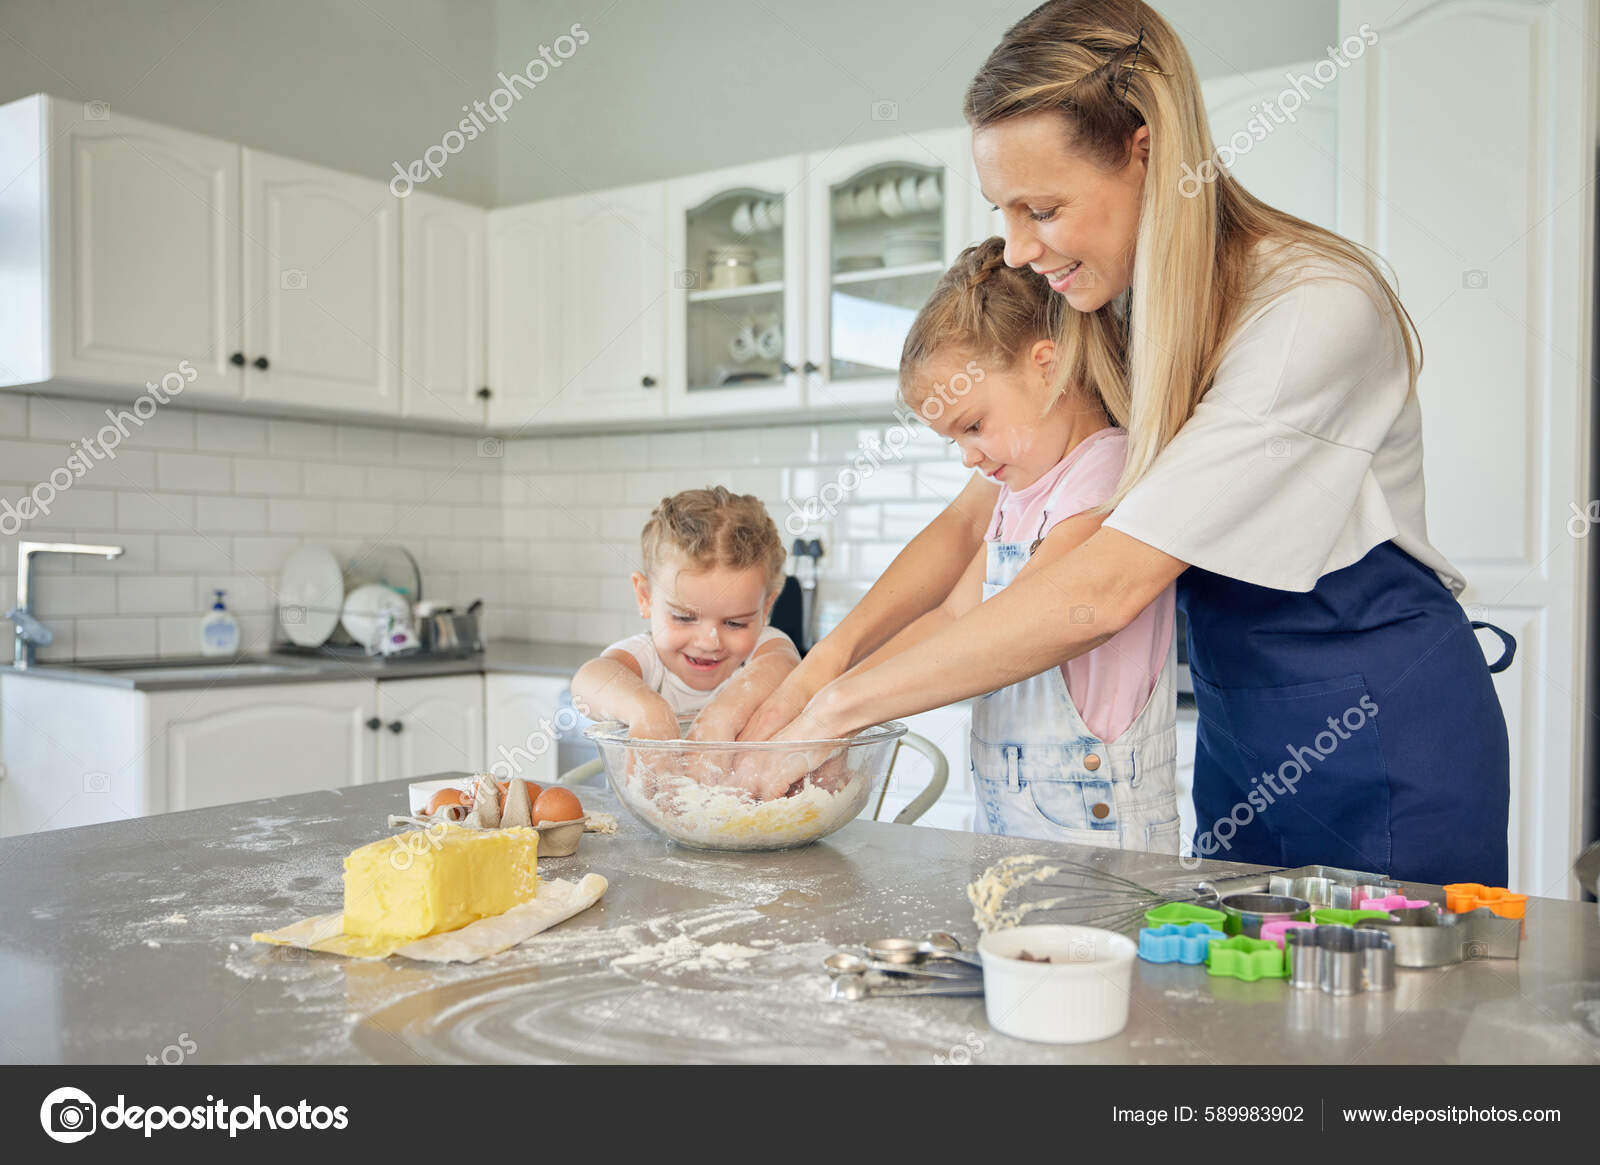 https://st.depositphotos.com/62628780/58998/i/1600/depositphotos_589983902-stock-photo-caucasian-caring-mother-little-daughters.jpg